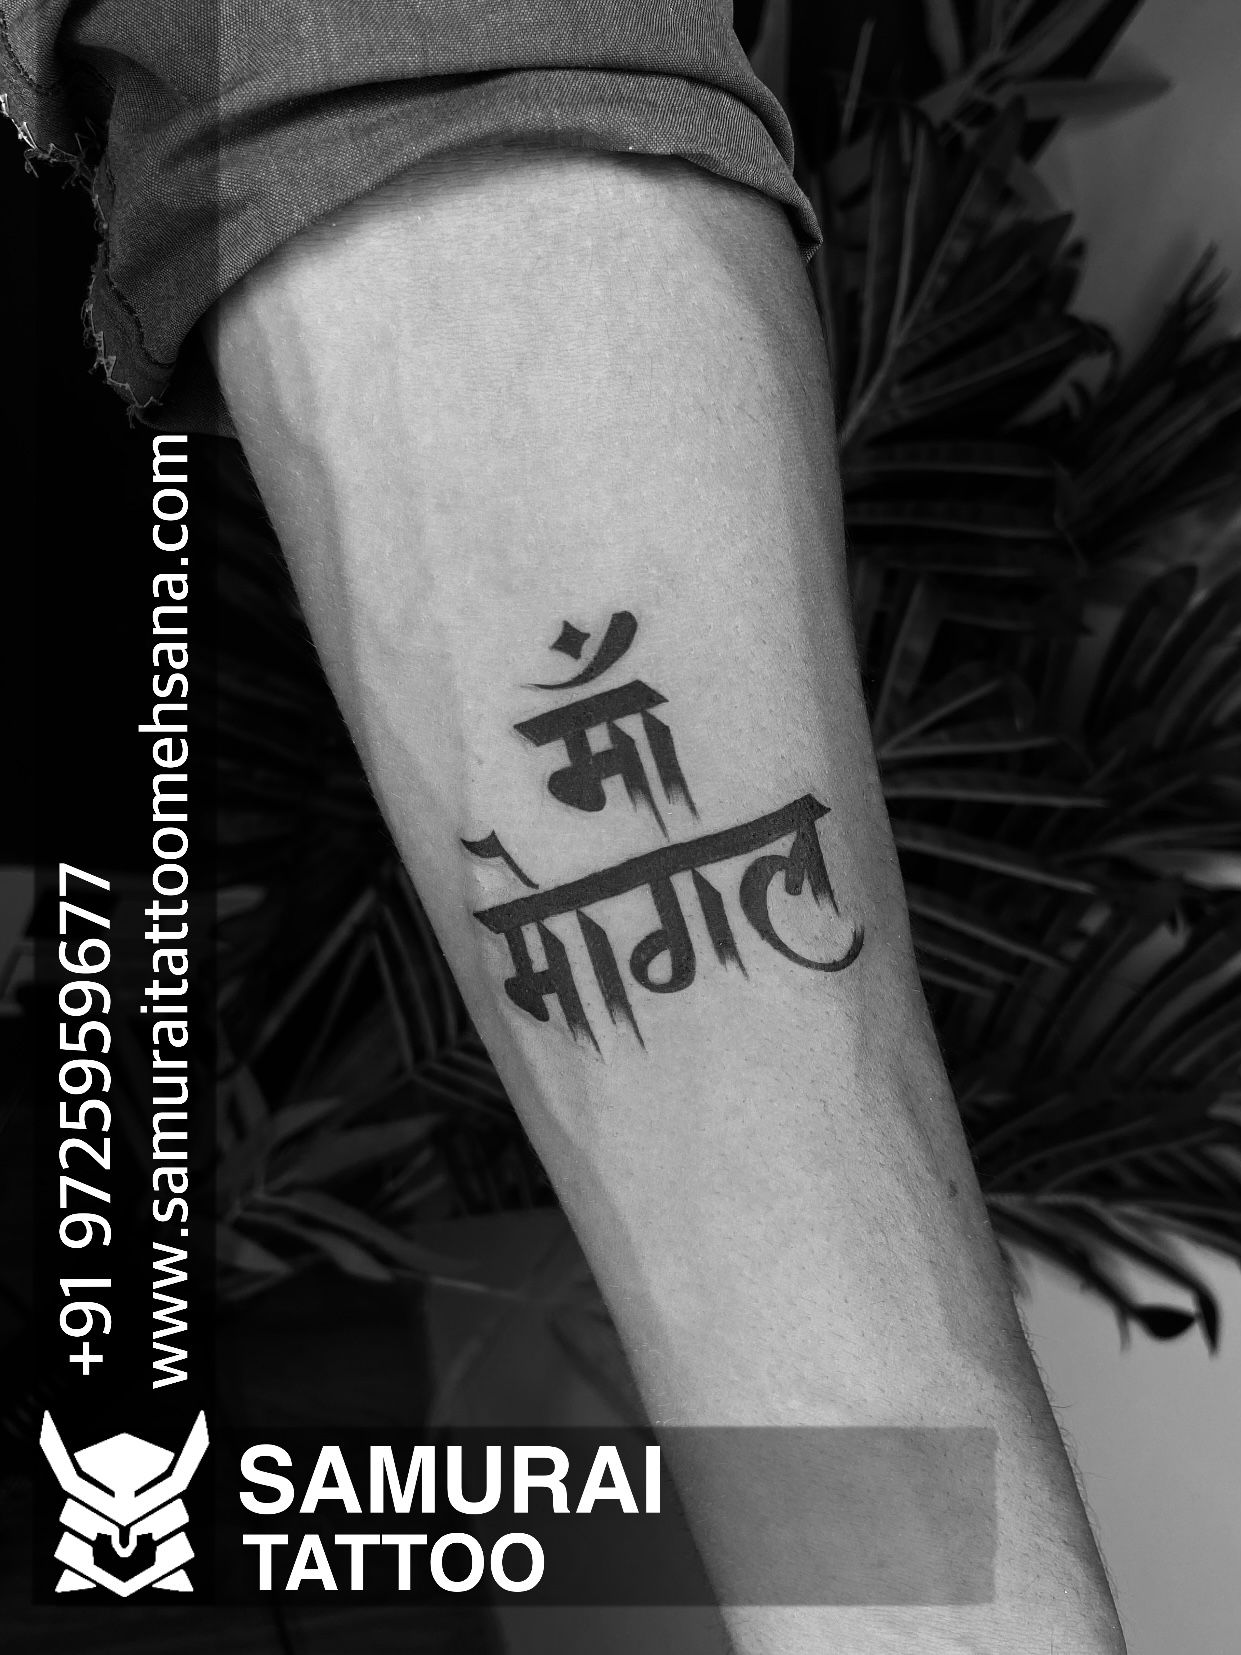 Maa Mogal Tattoo | Name tattoo, Tattoos, Doodle on photo